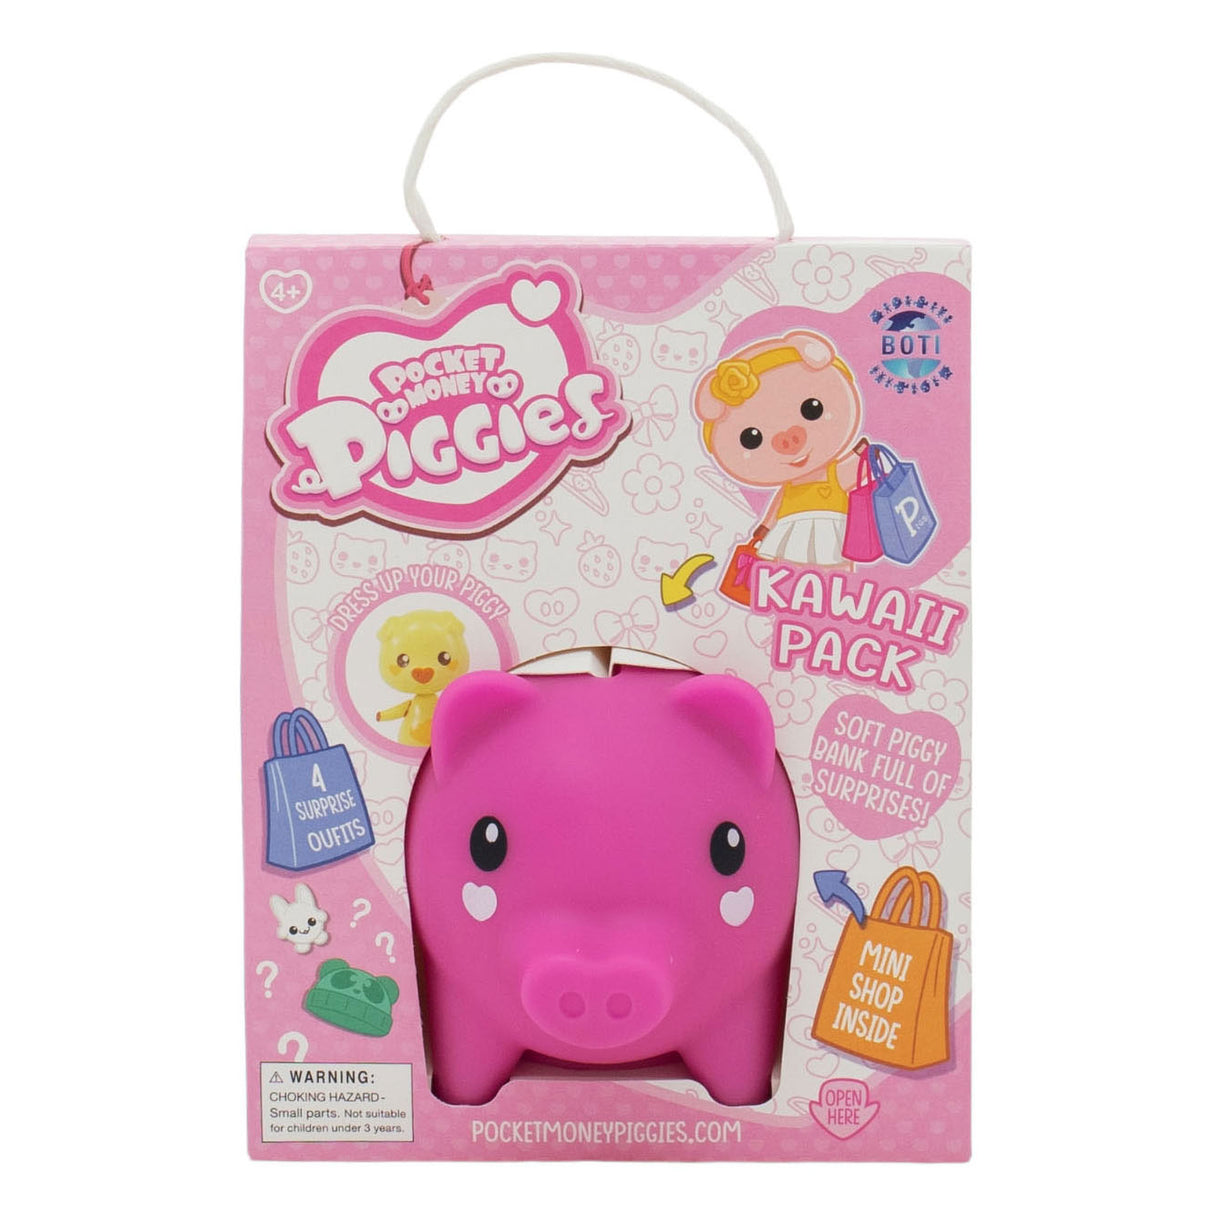 Boti Pockey Money Piggies Speelfiguur met Spaarpot Kawaii Pack